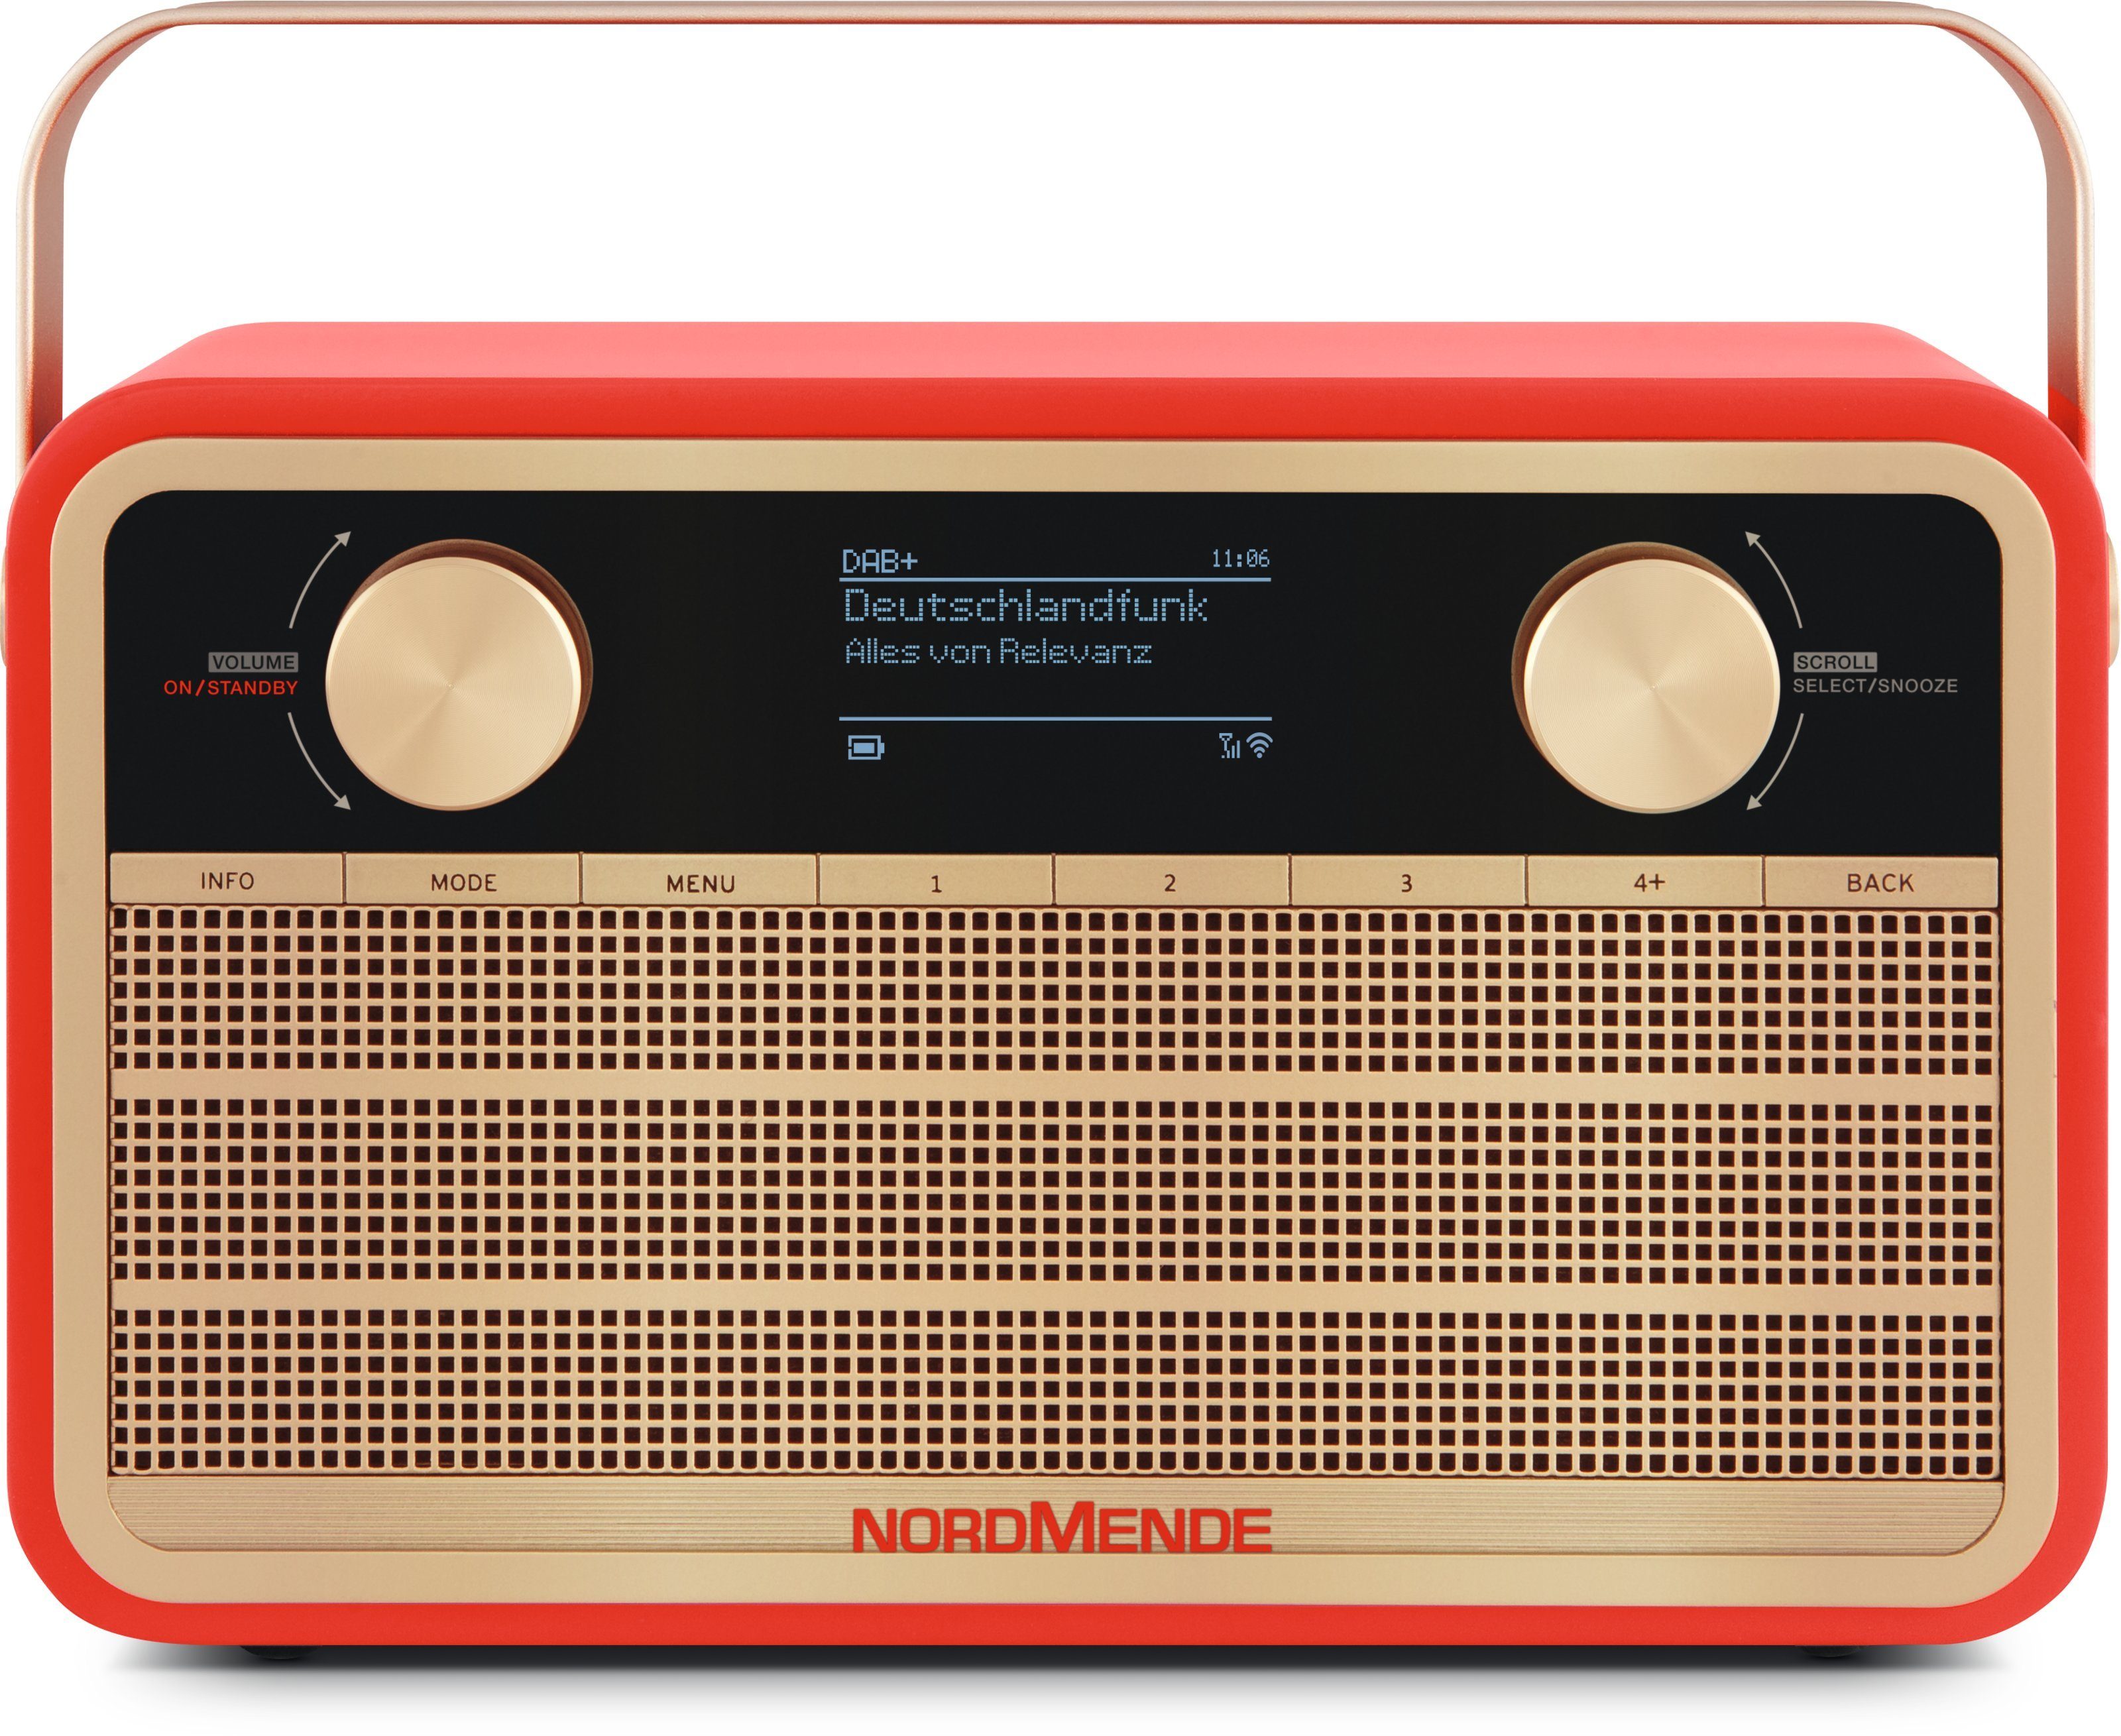 Nordmende Transita 121 IR Digitalradio (DAB) (Digitalradio (DAB), UKW mit RDS, Internetradio, 5,00 W, Metalltragegriff, Retro-Design) rot